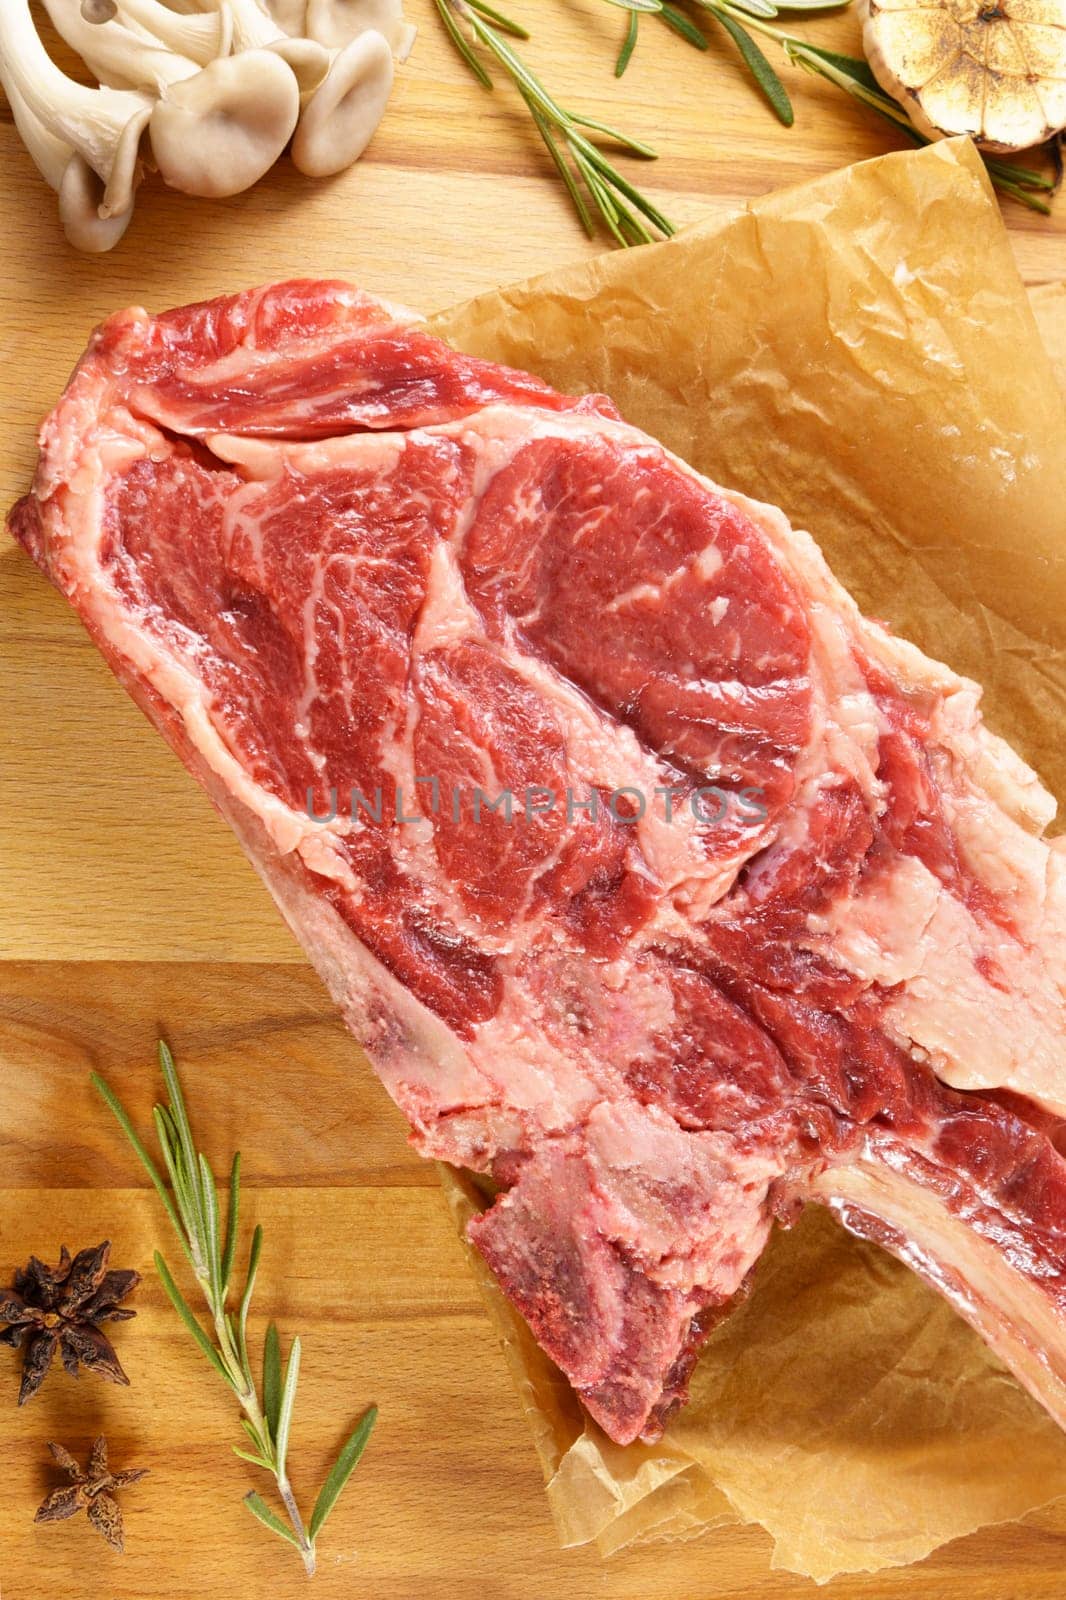 Raw cowboy steak on wooden background, prime rib eye on bone. Vertical photo by darksoul72